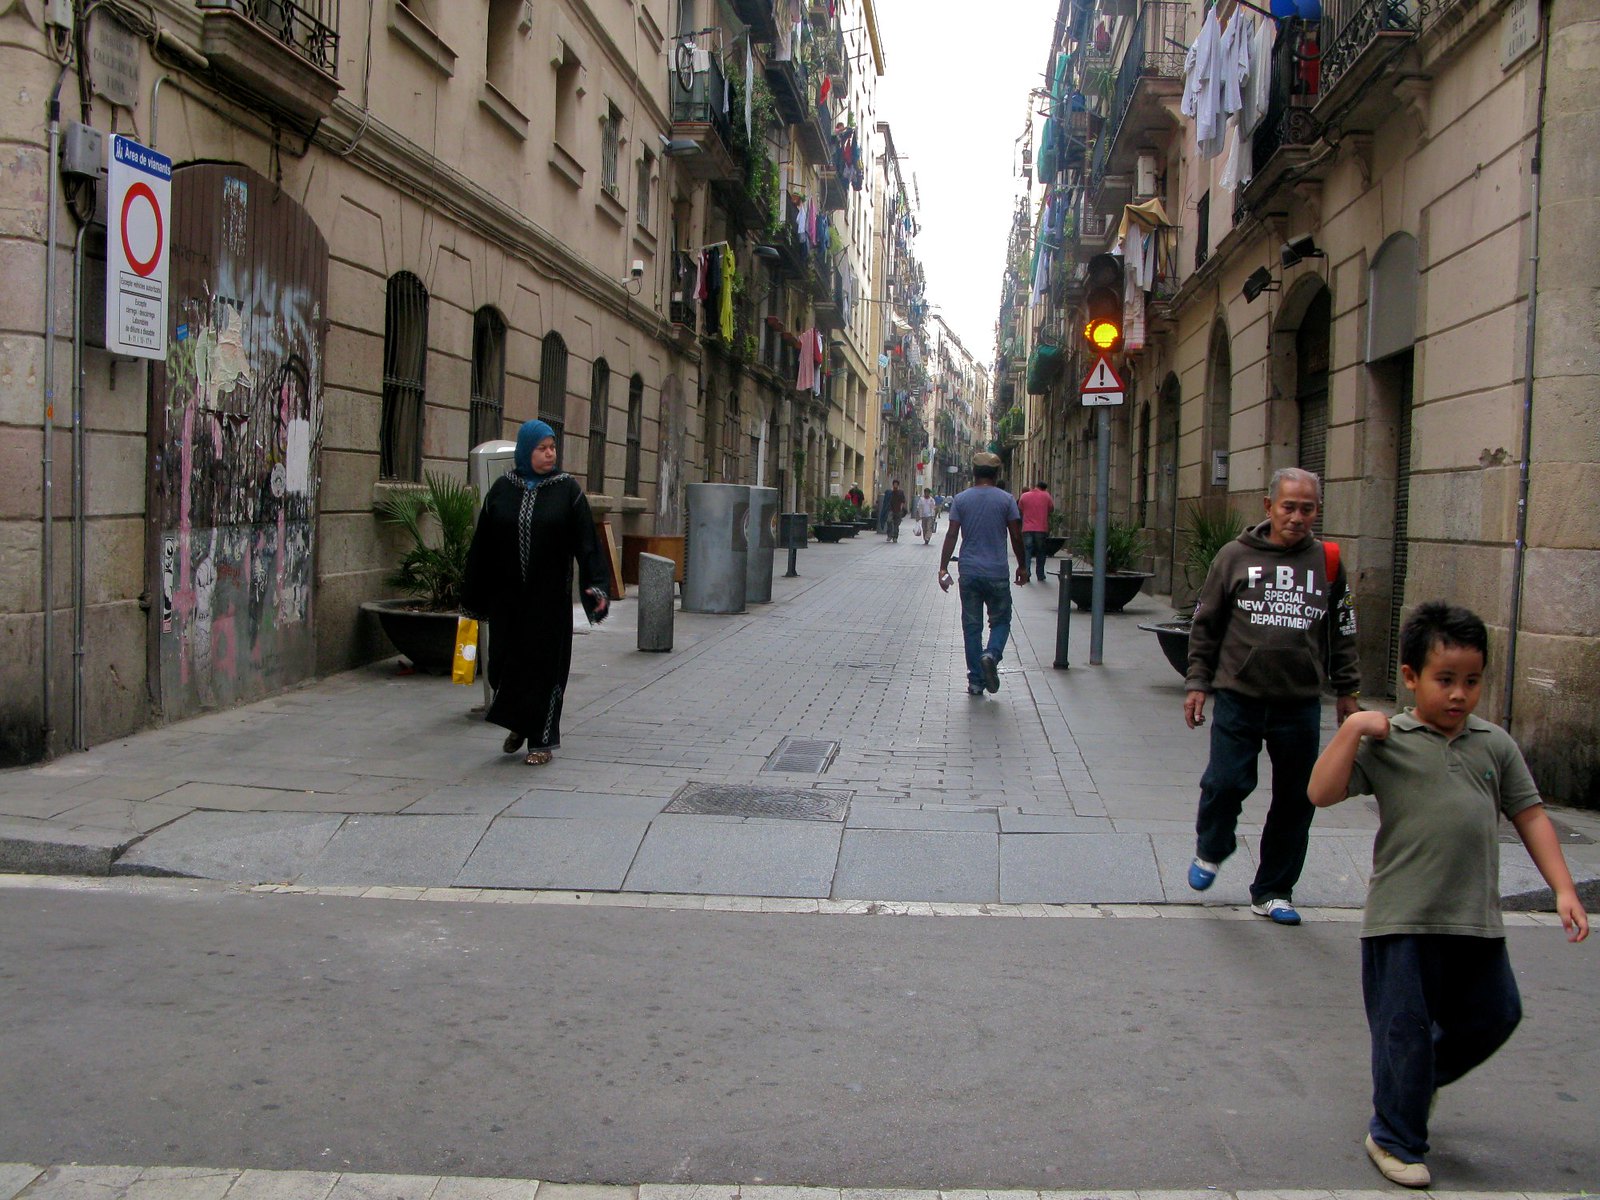 Muslims in El Raval, Barcelona